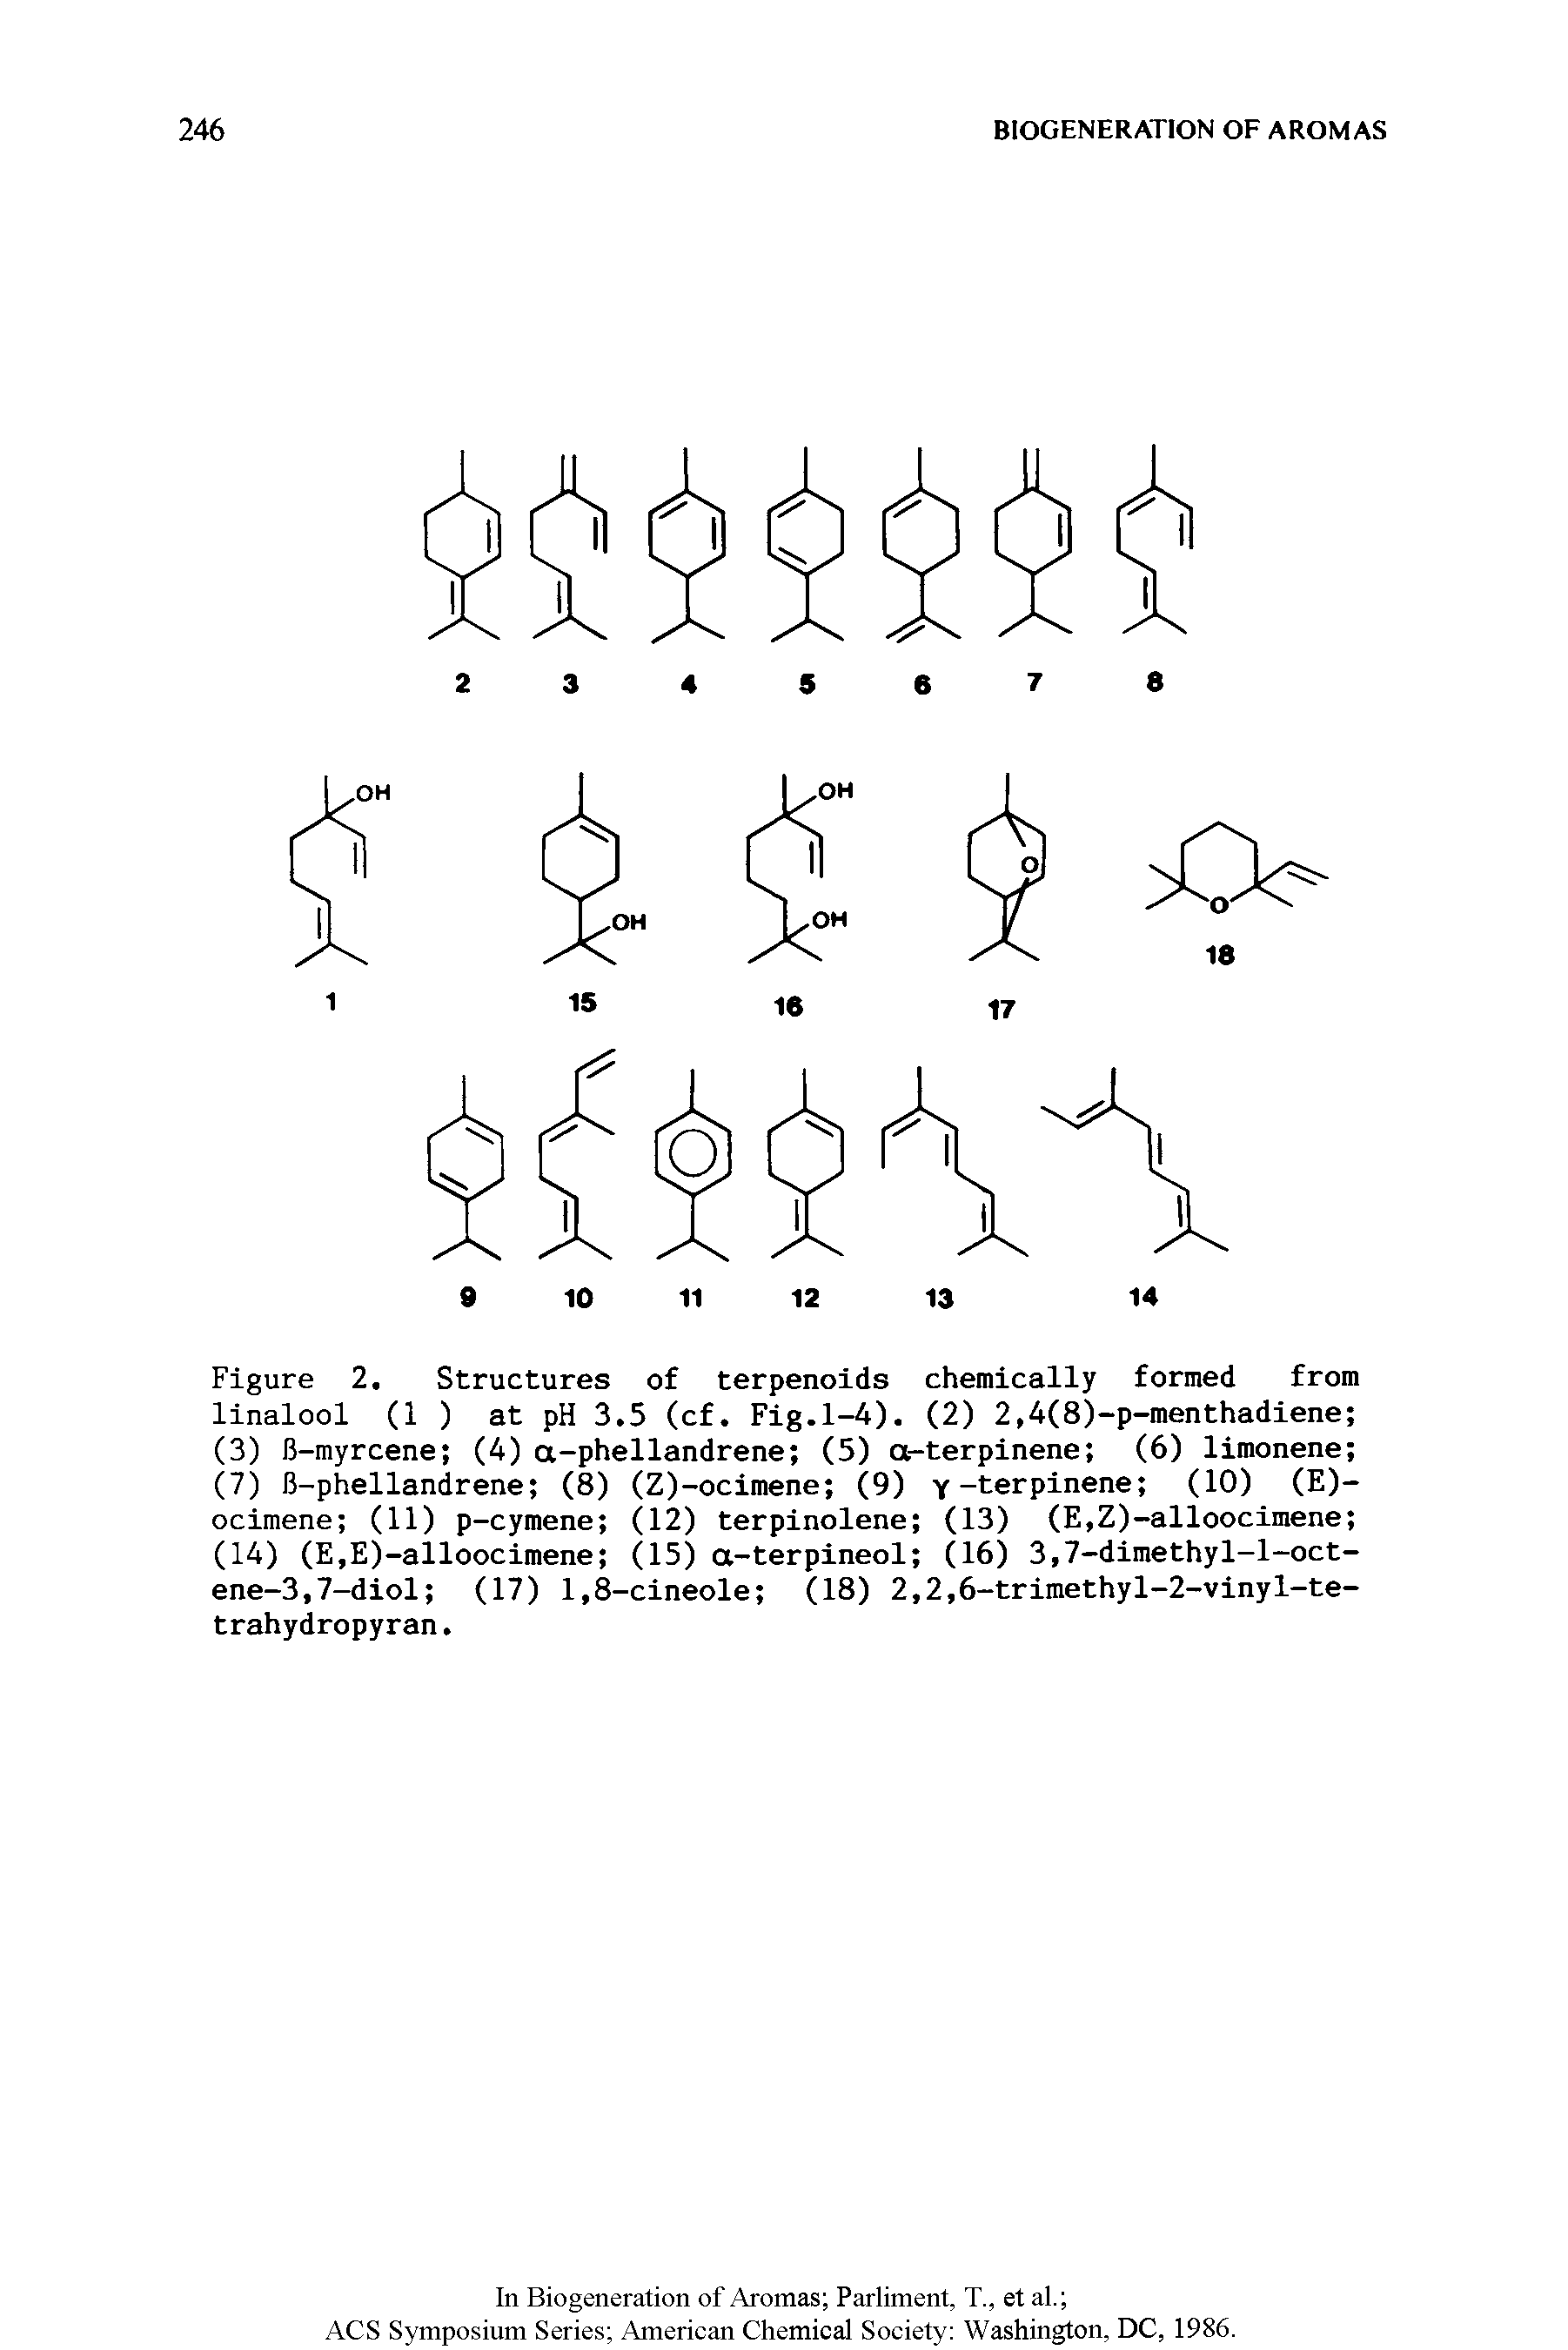 Figure 2. Structures of terpenoids chemically formed from linalool (1 ) at pH 3.5 (cf. Fig.1-4). (2) 2,4(8)-p-menthadiene (3) B-myrcene (4) a-phellandrene (5) cx-terpinene (6) limonene (7) B-phellandrene (8) (Z)-ocimene (9) y-terpinene (10) (E)-ocimene (11) p-cymene (12) terpinolene (13) (E,Z)-alloocimene (14) (E,E)-alloocimene (15) a-terpineol (16) 3,7-dimethyl-l-oct-ene-3,7-diol (17) 1,8-cineole (18) 2,2,6-trimethyl-2-vinyl-te-trahydropyran.